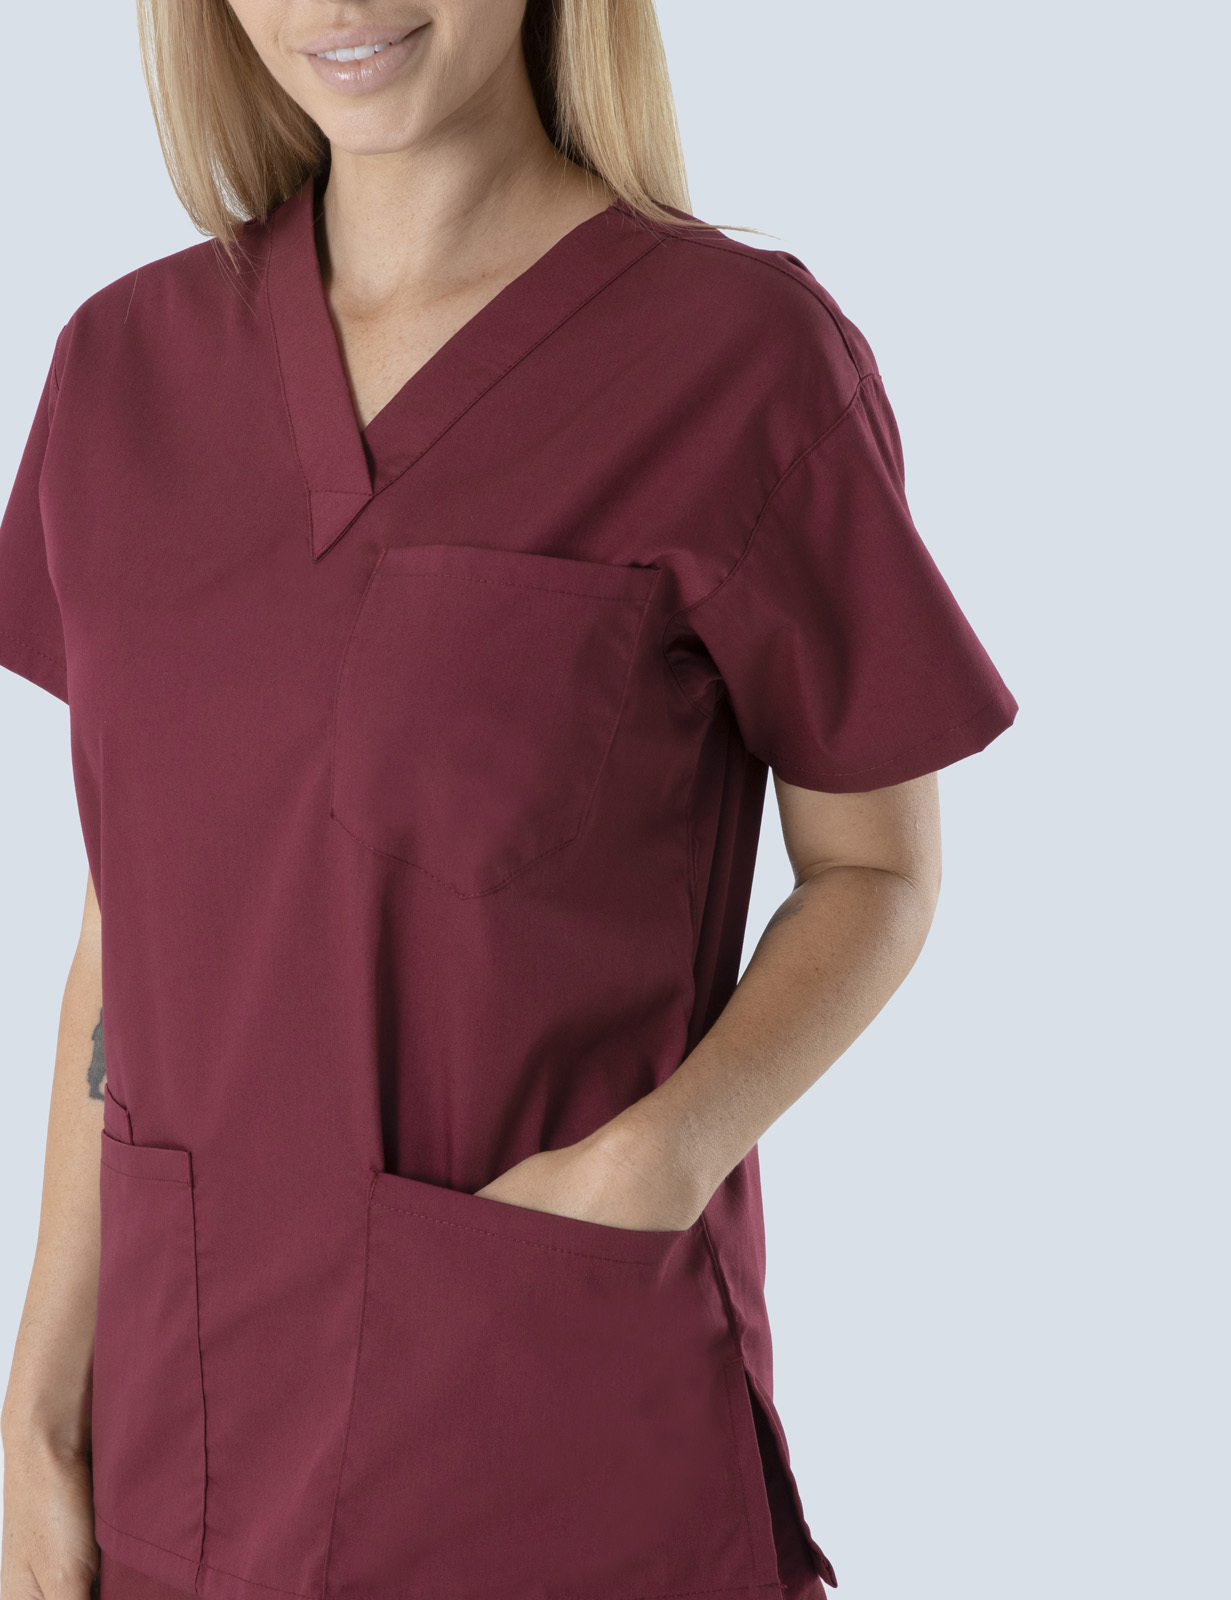 Canberra Hospital Stroke Unit - Stroke Liaison Nurse Uniform Set Bundle (4 Pocket and Cargo Pants in Burgundy incl Logos)